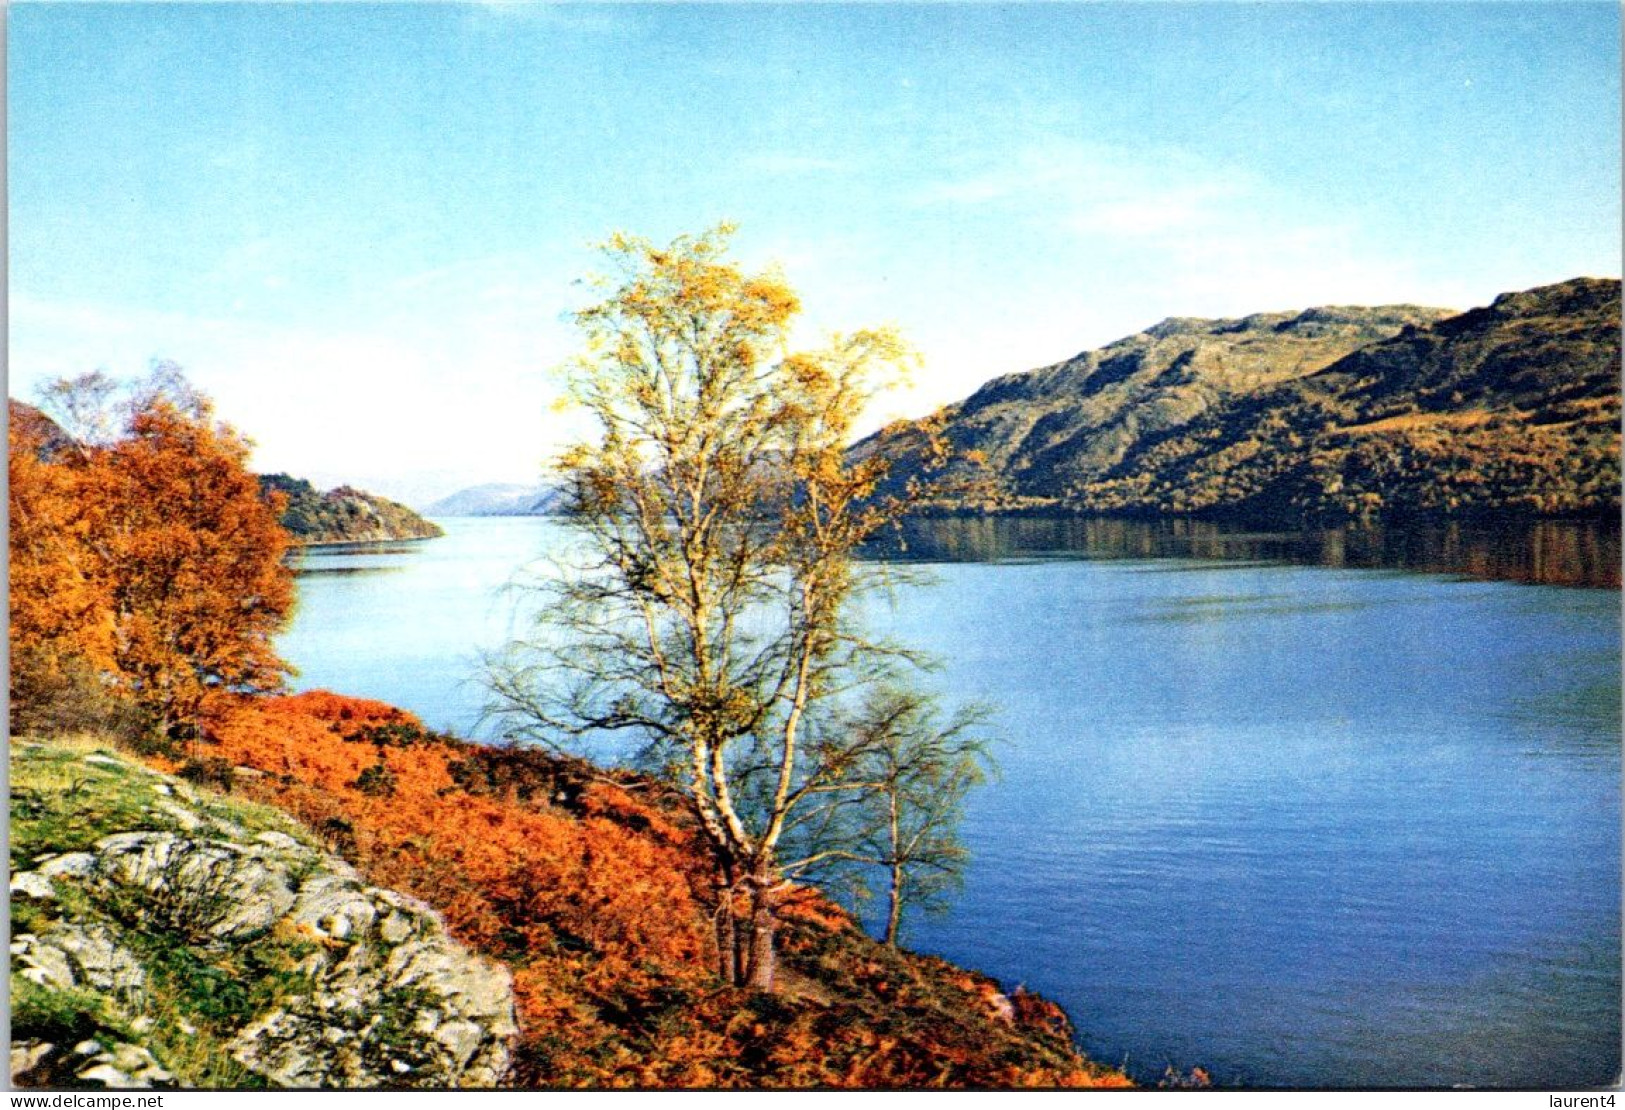 4-11-2023 (1 V 20) UK - Loch Ness - Inverness-shire